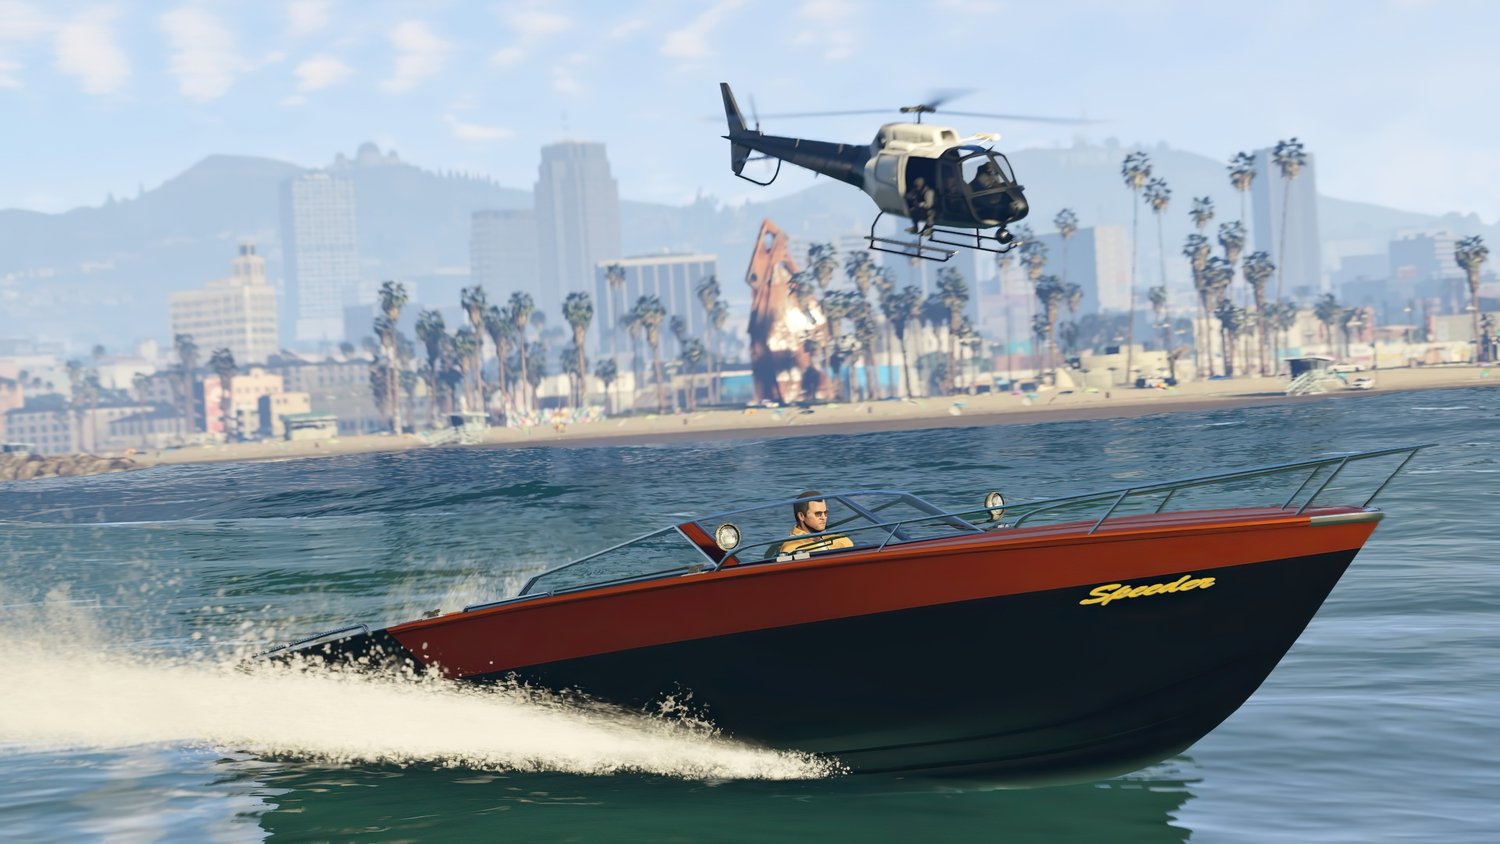 Игра Grand Theft Auto V Premium Online Edition (PS4, Русские субтитры) фото 